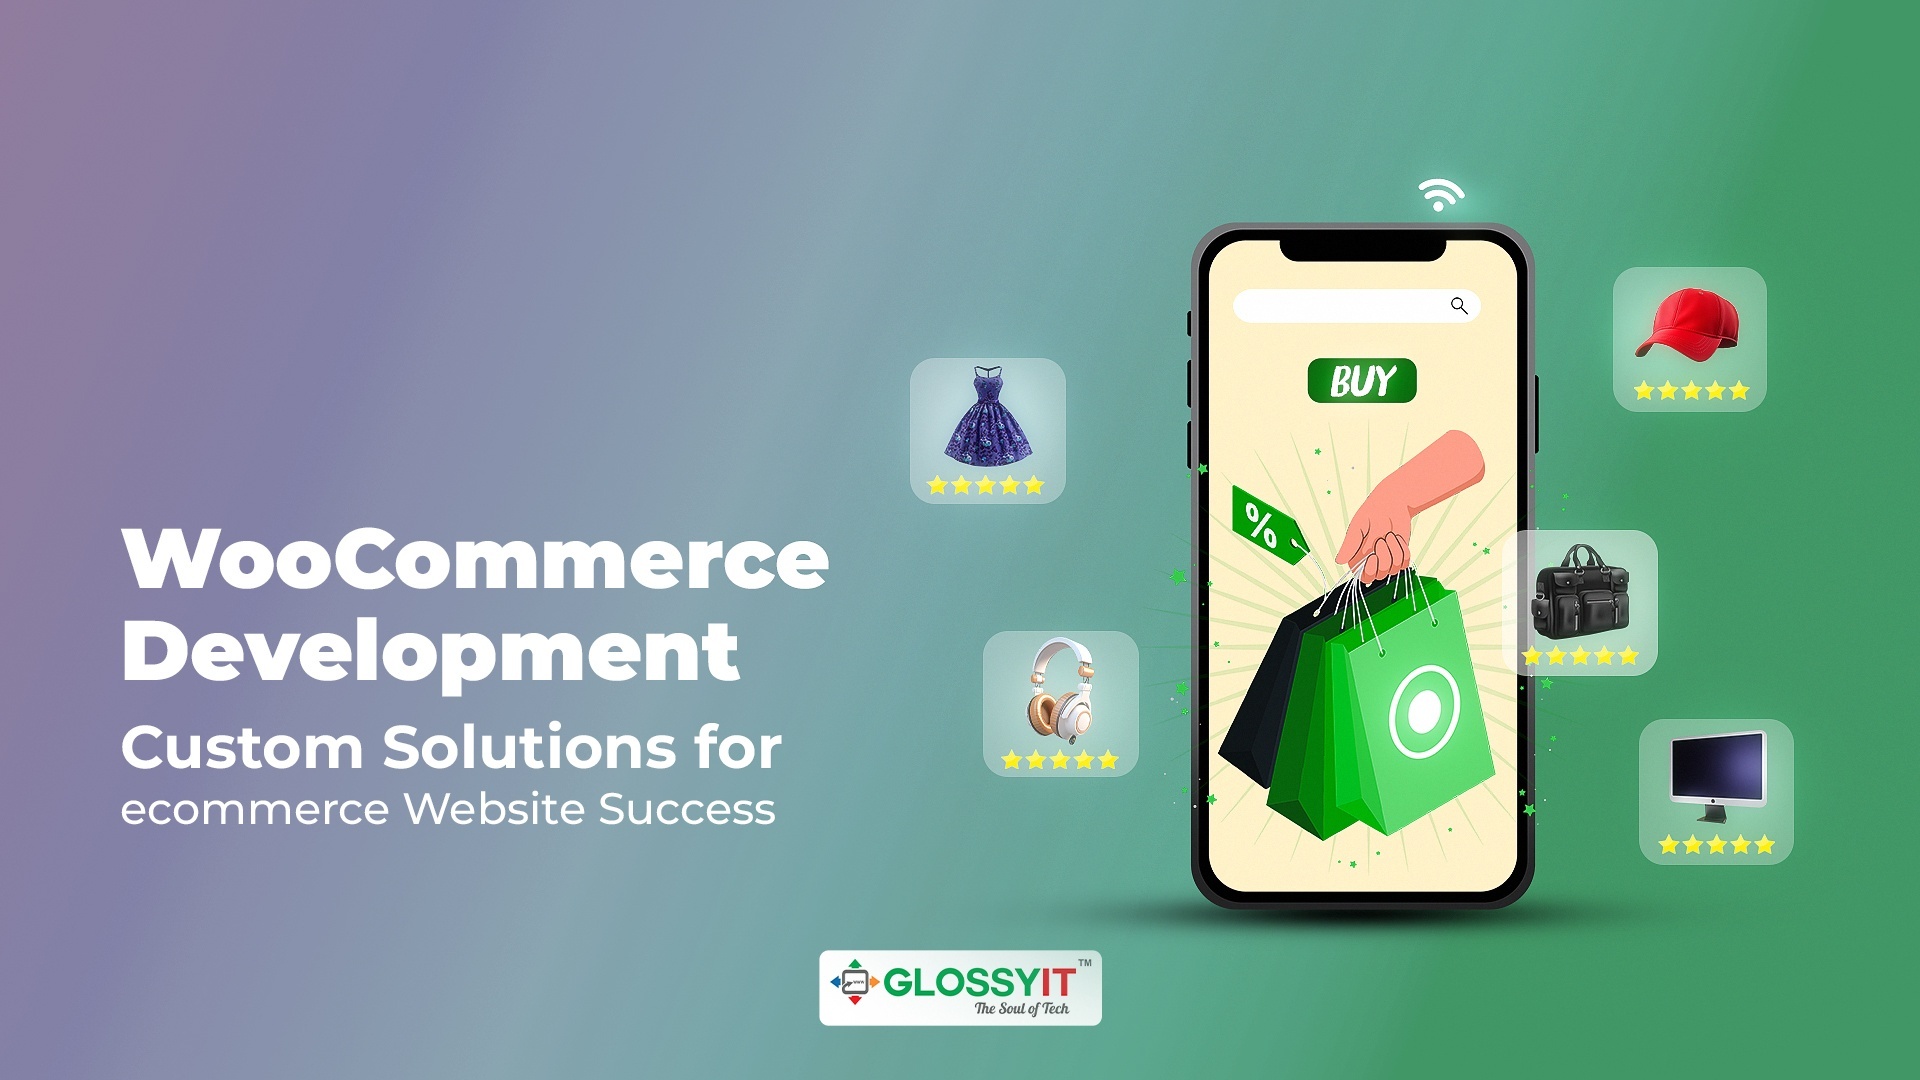 Master WooCommerce Development: Custom Solutions for ecommerce Website Success